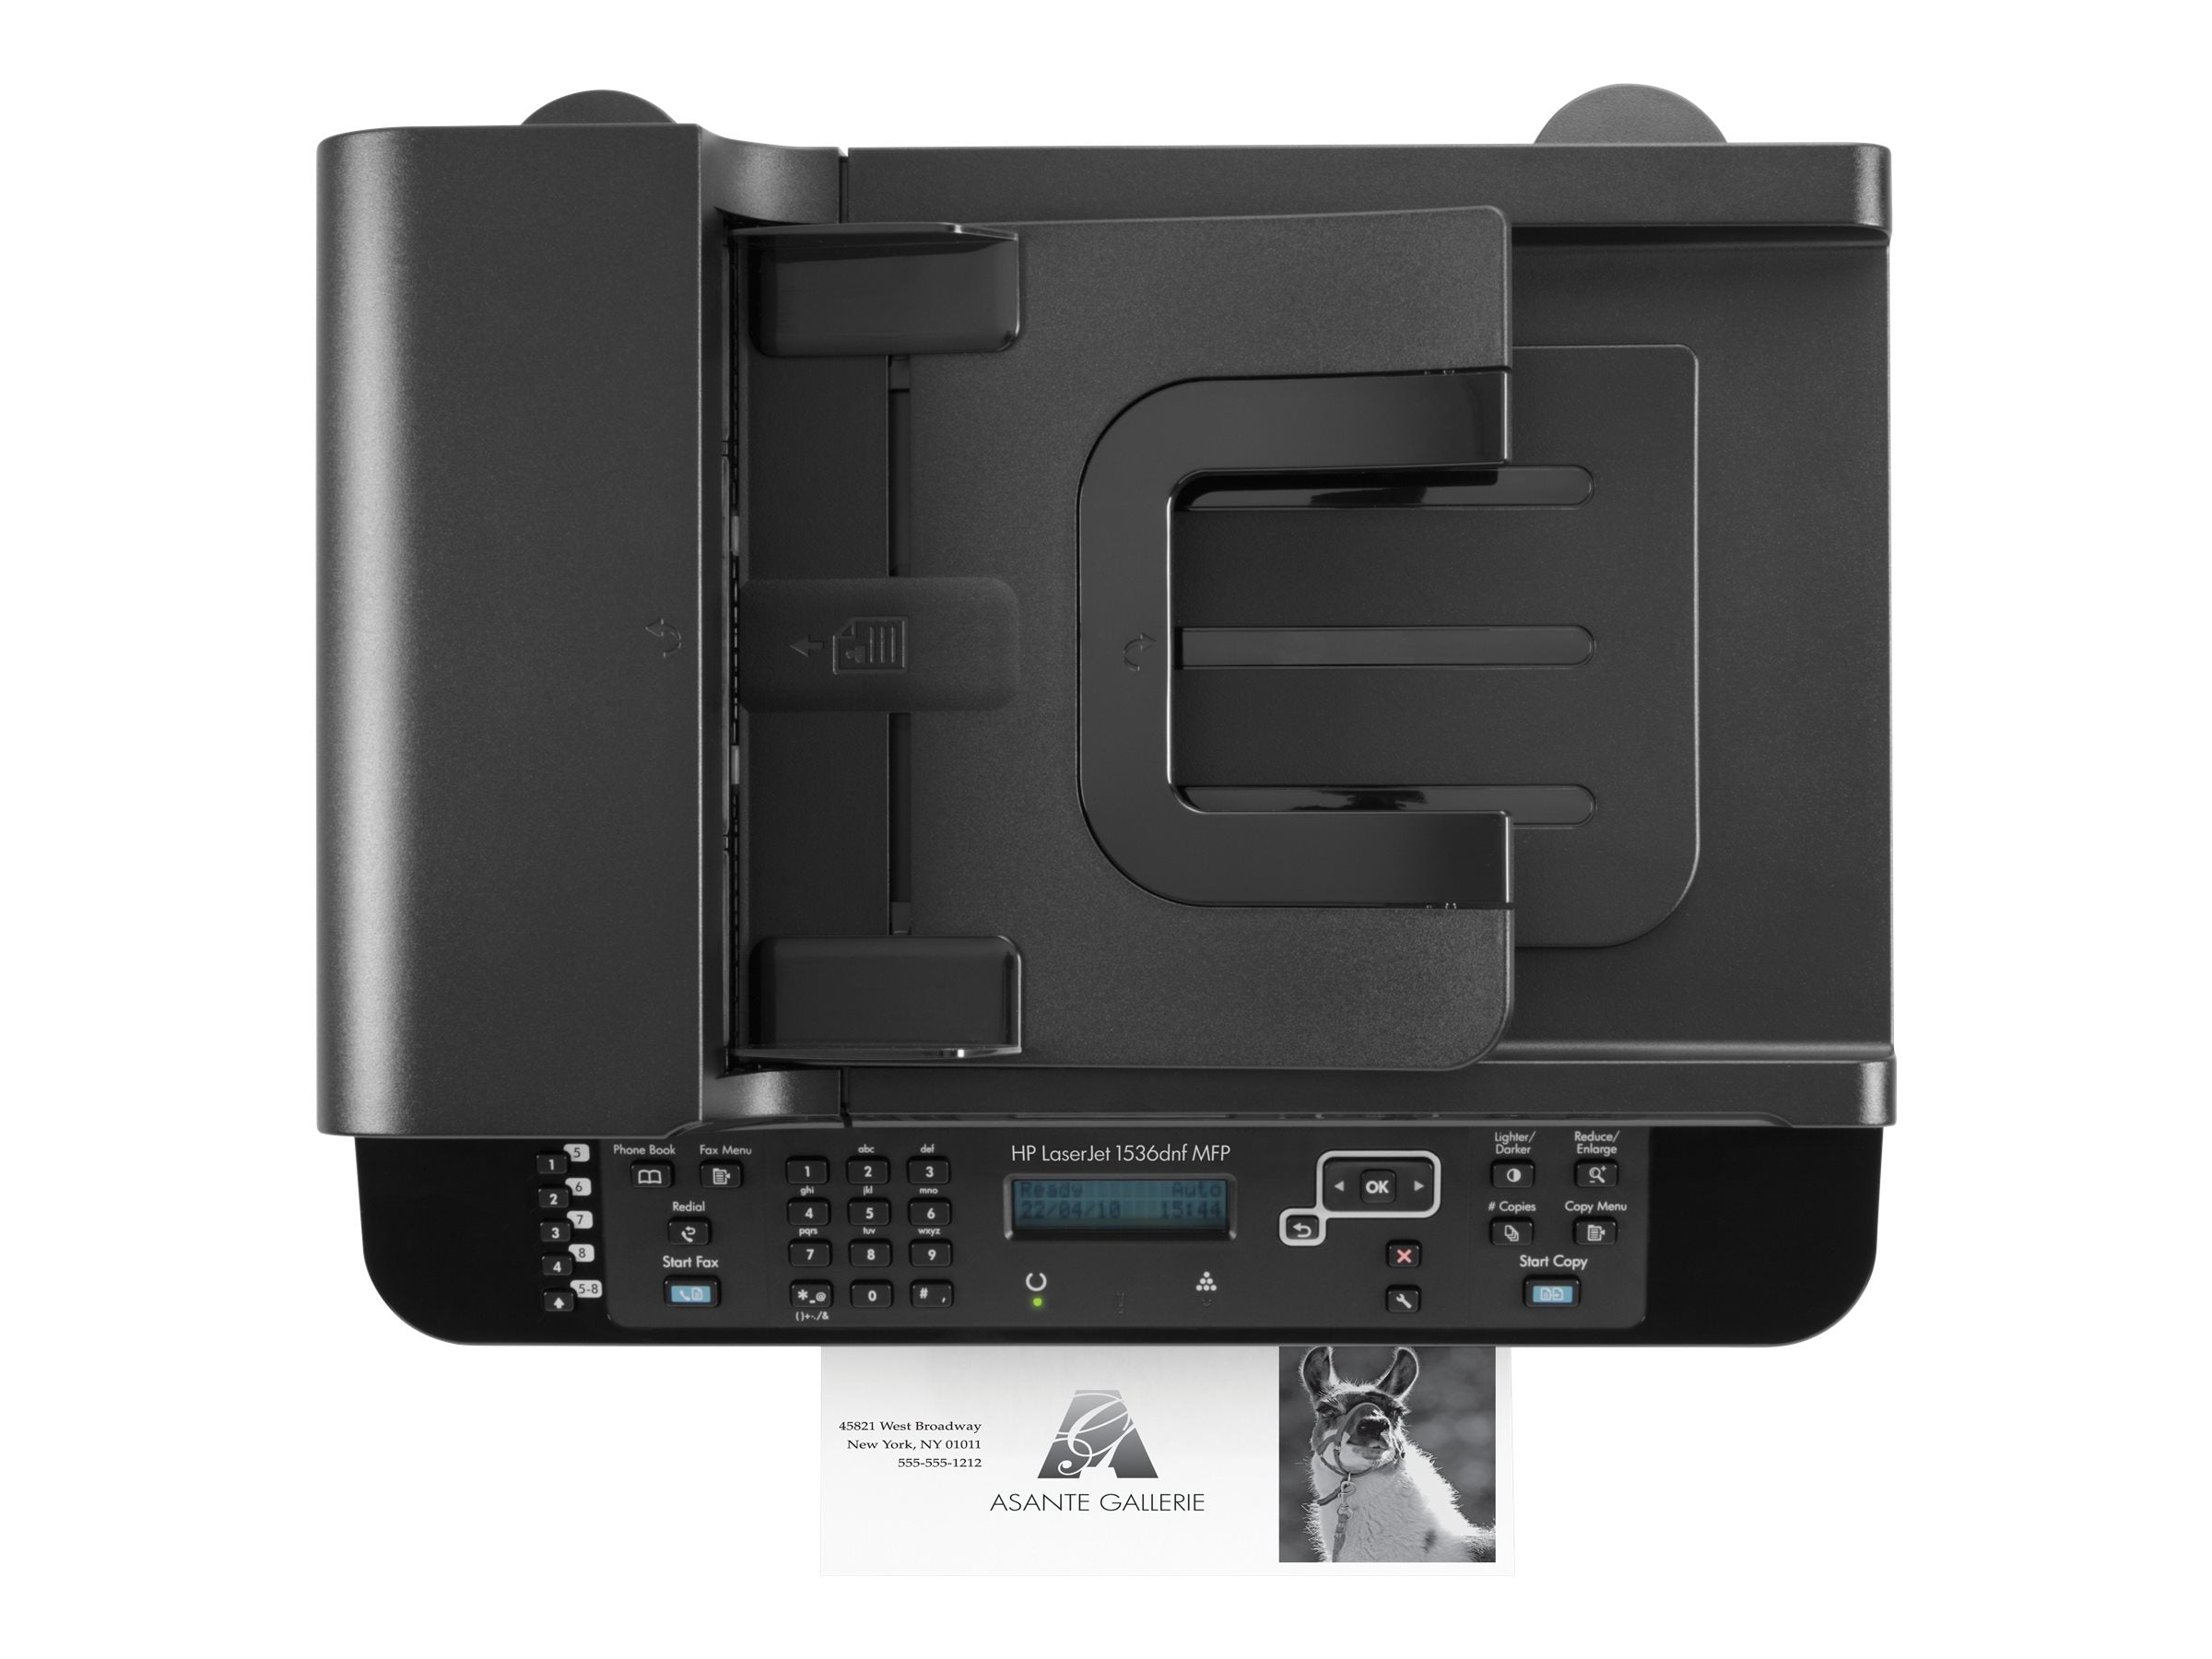 HP M1536dnf Printer